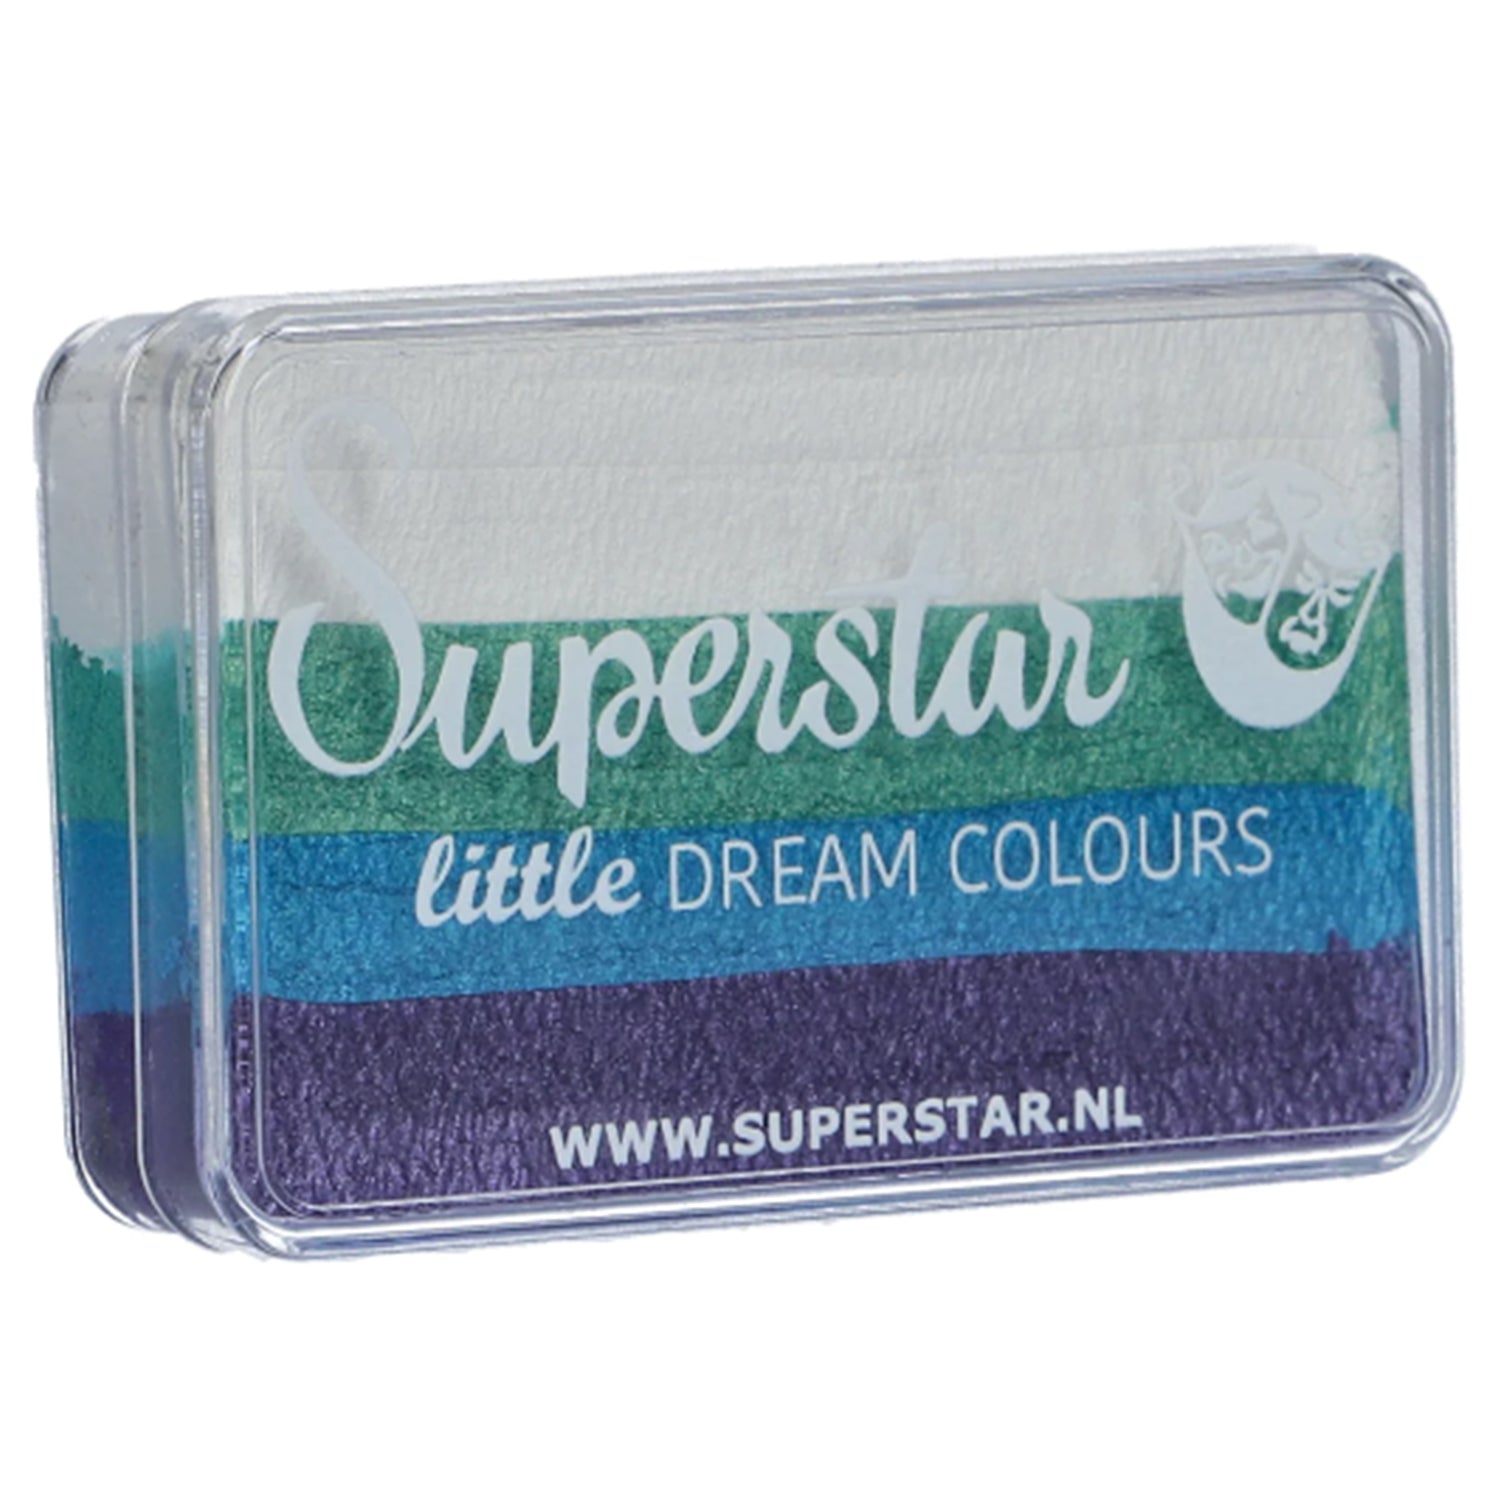 Superstar Little Dream Colours Rainbow Cake - Little Mermaid (30 gm)